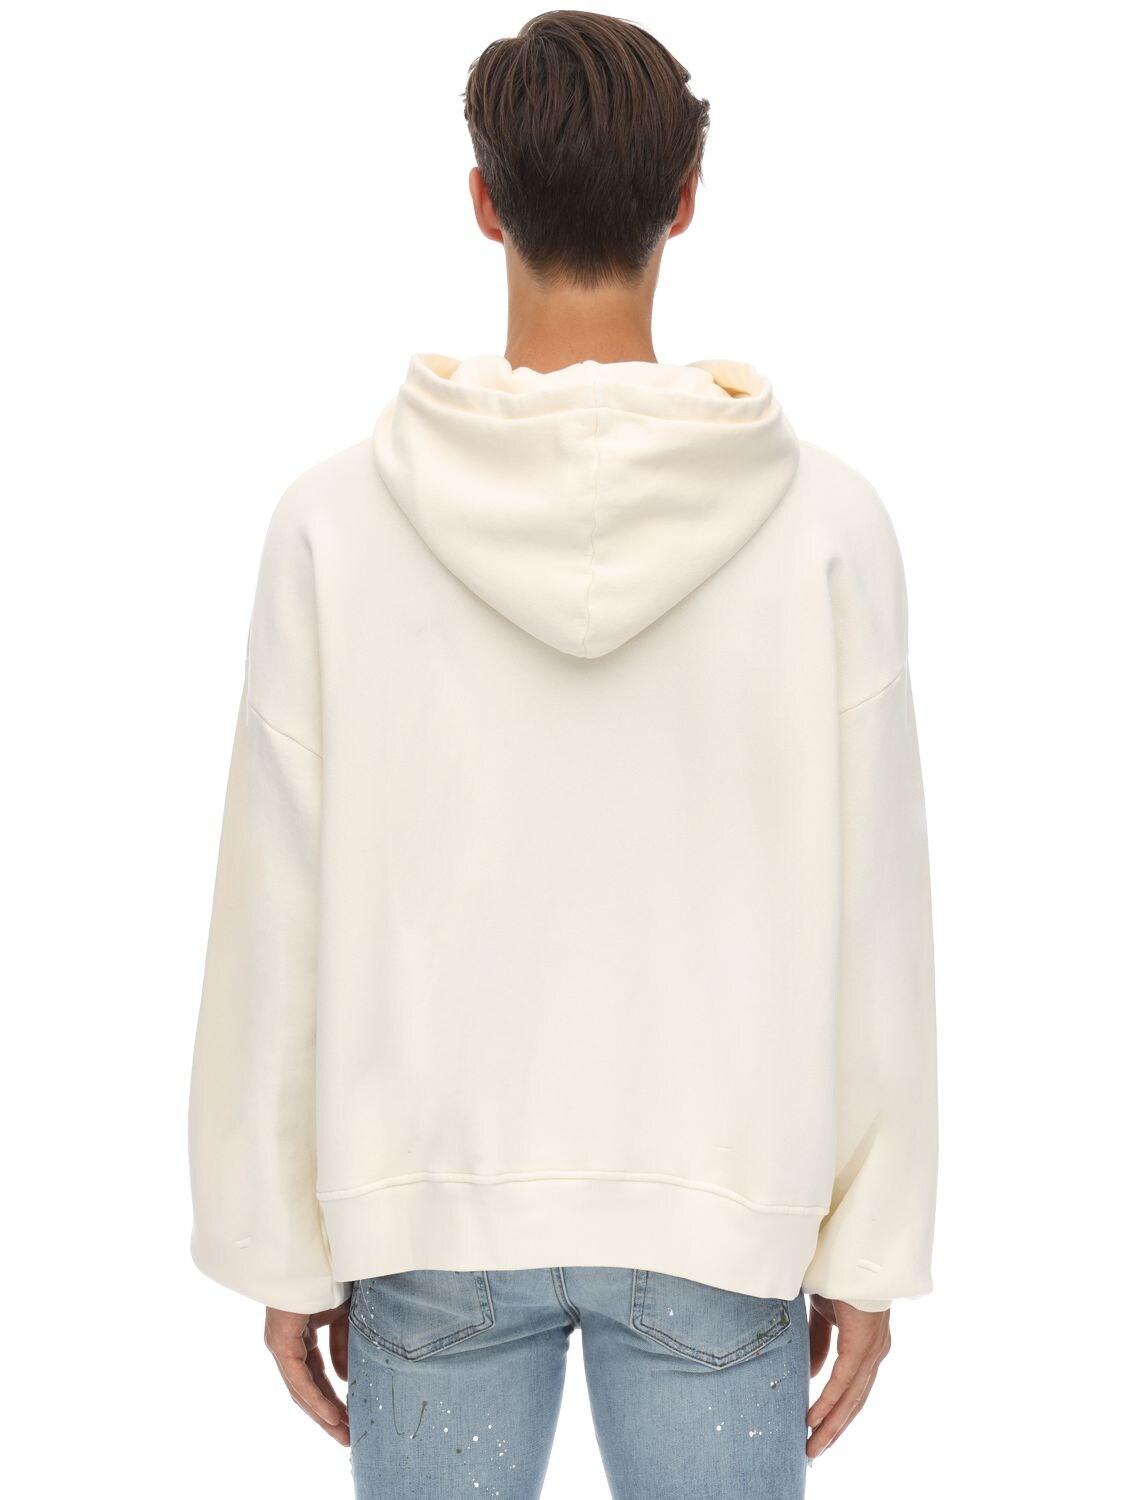 Amiri Printed Cotton Jersey Sweatshirt Hoodie in White for Men - Lyst